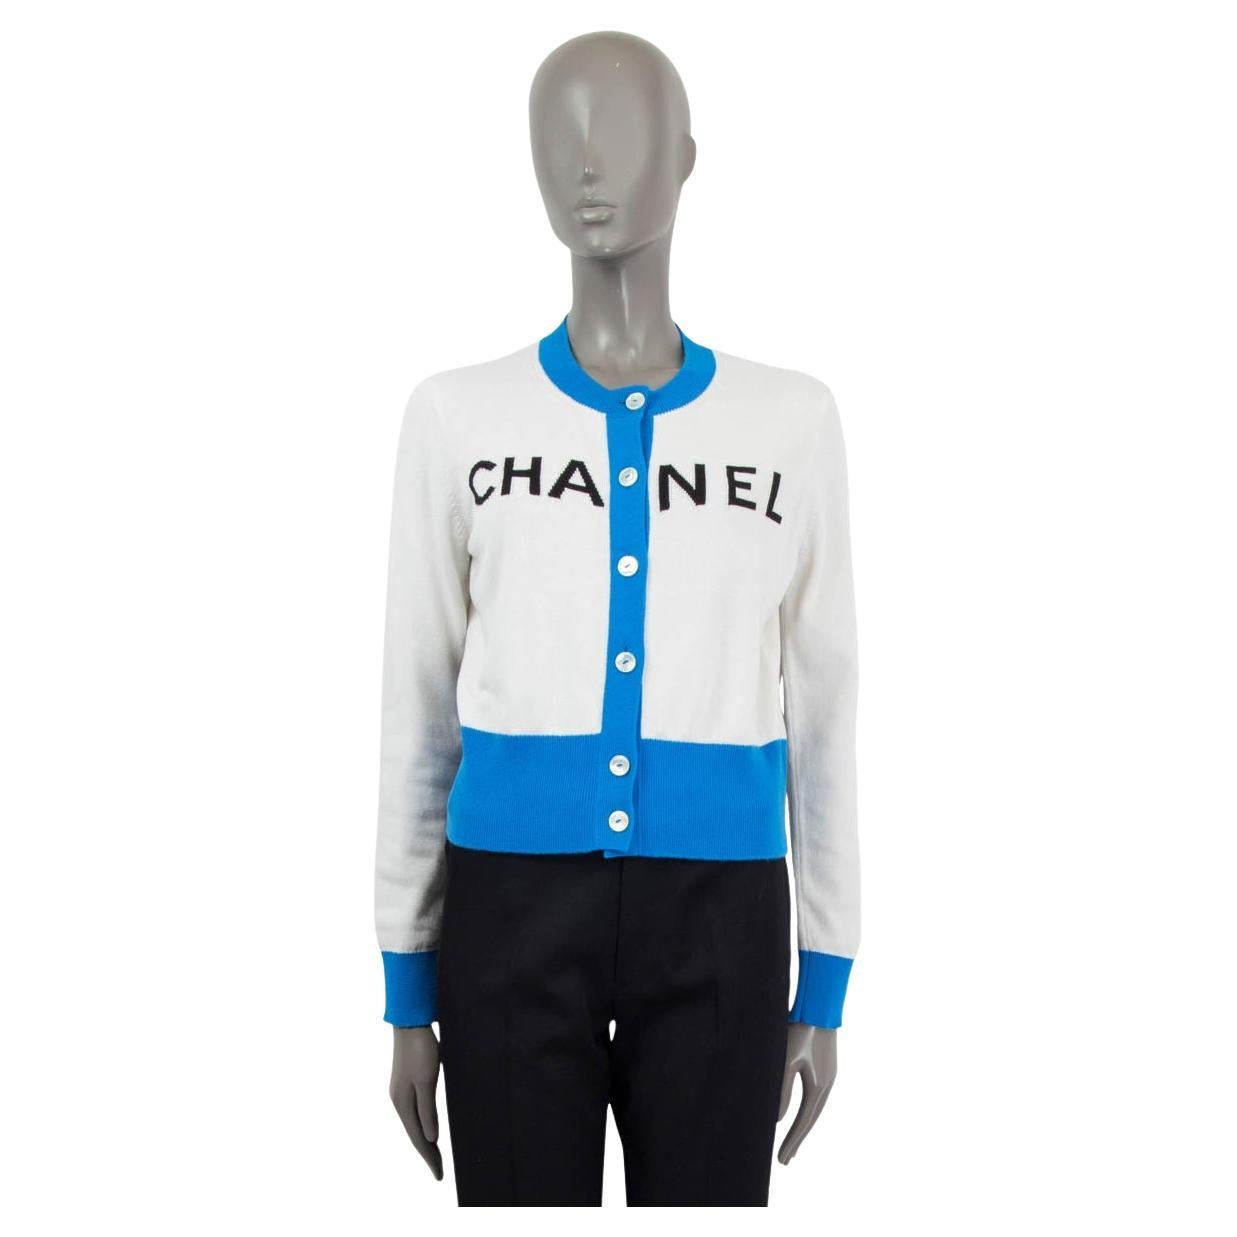 CHANEL blanc & bleu cachemire 2019 19S ICONIC LOGO Cardigan Sweater 38 S